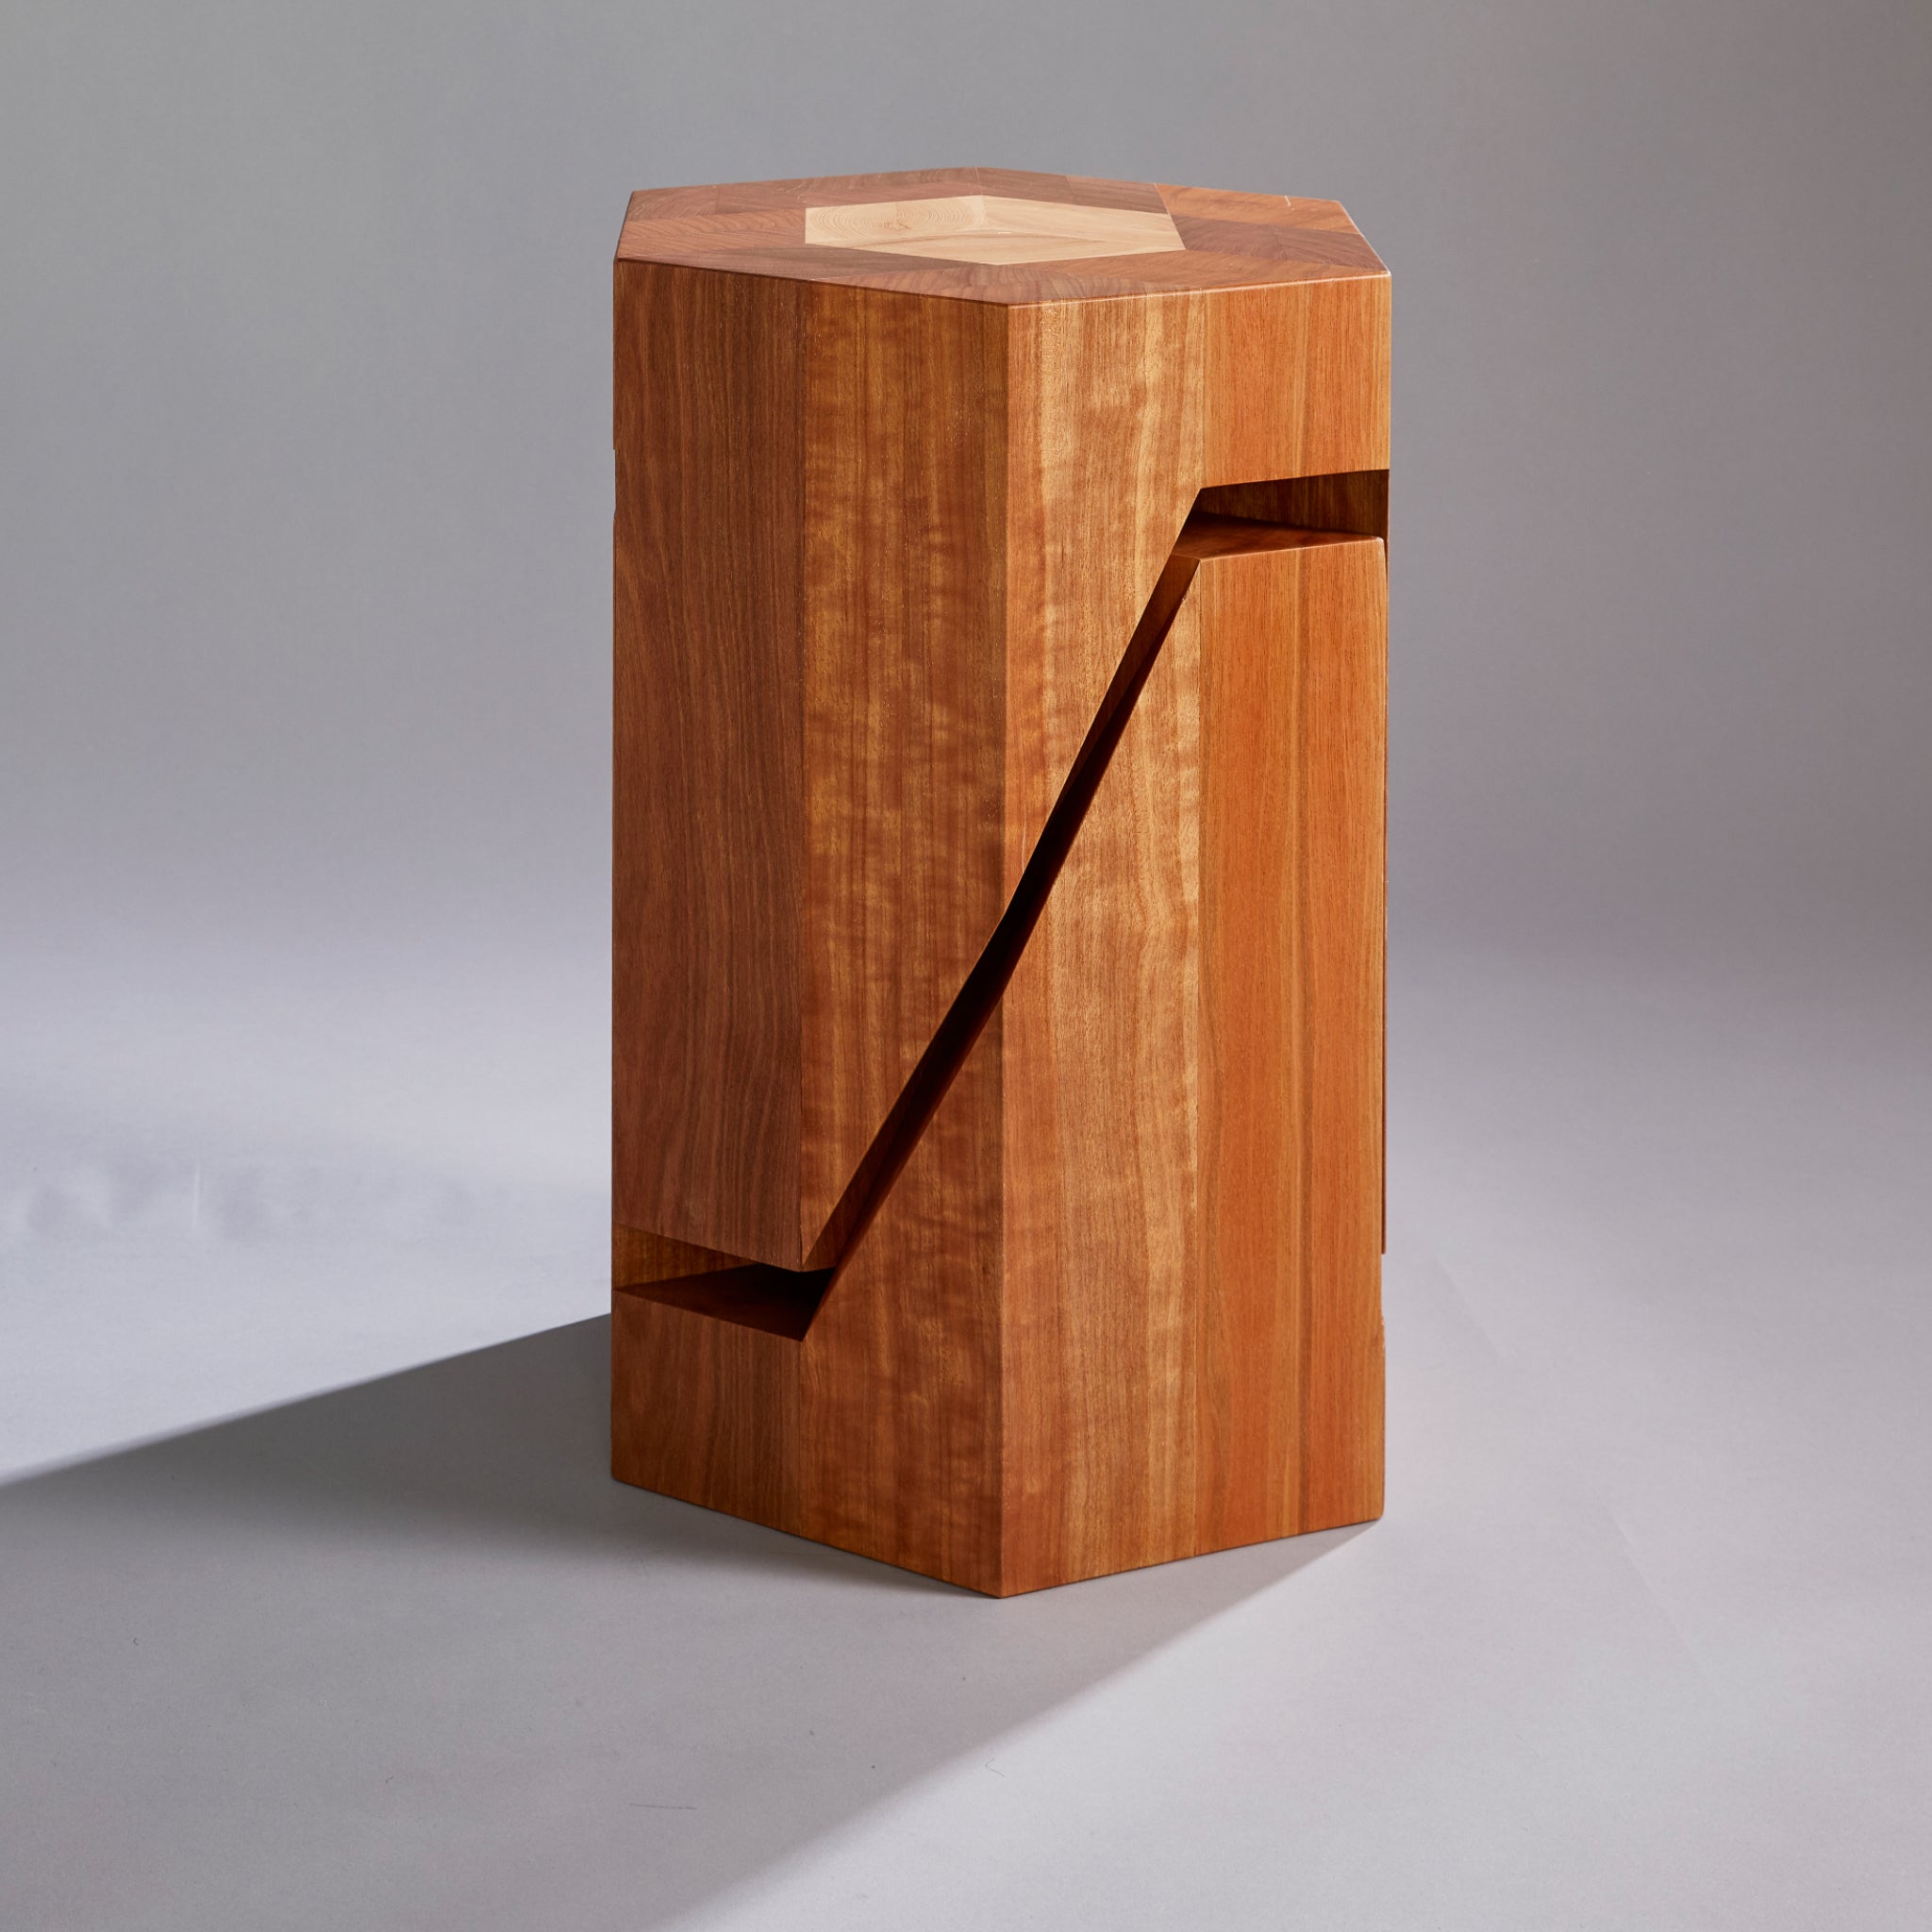 Yosegi Wood Stool: Japanese Elegance meets Modern Style nest